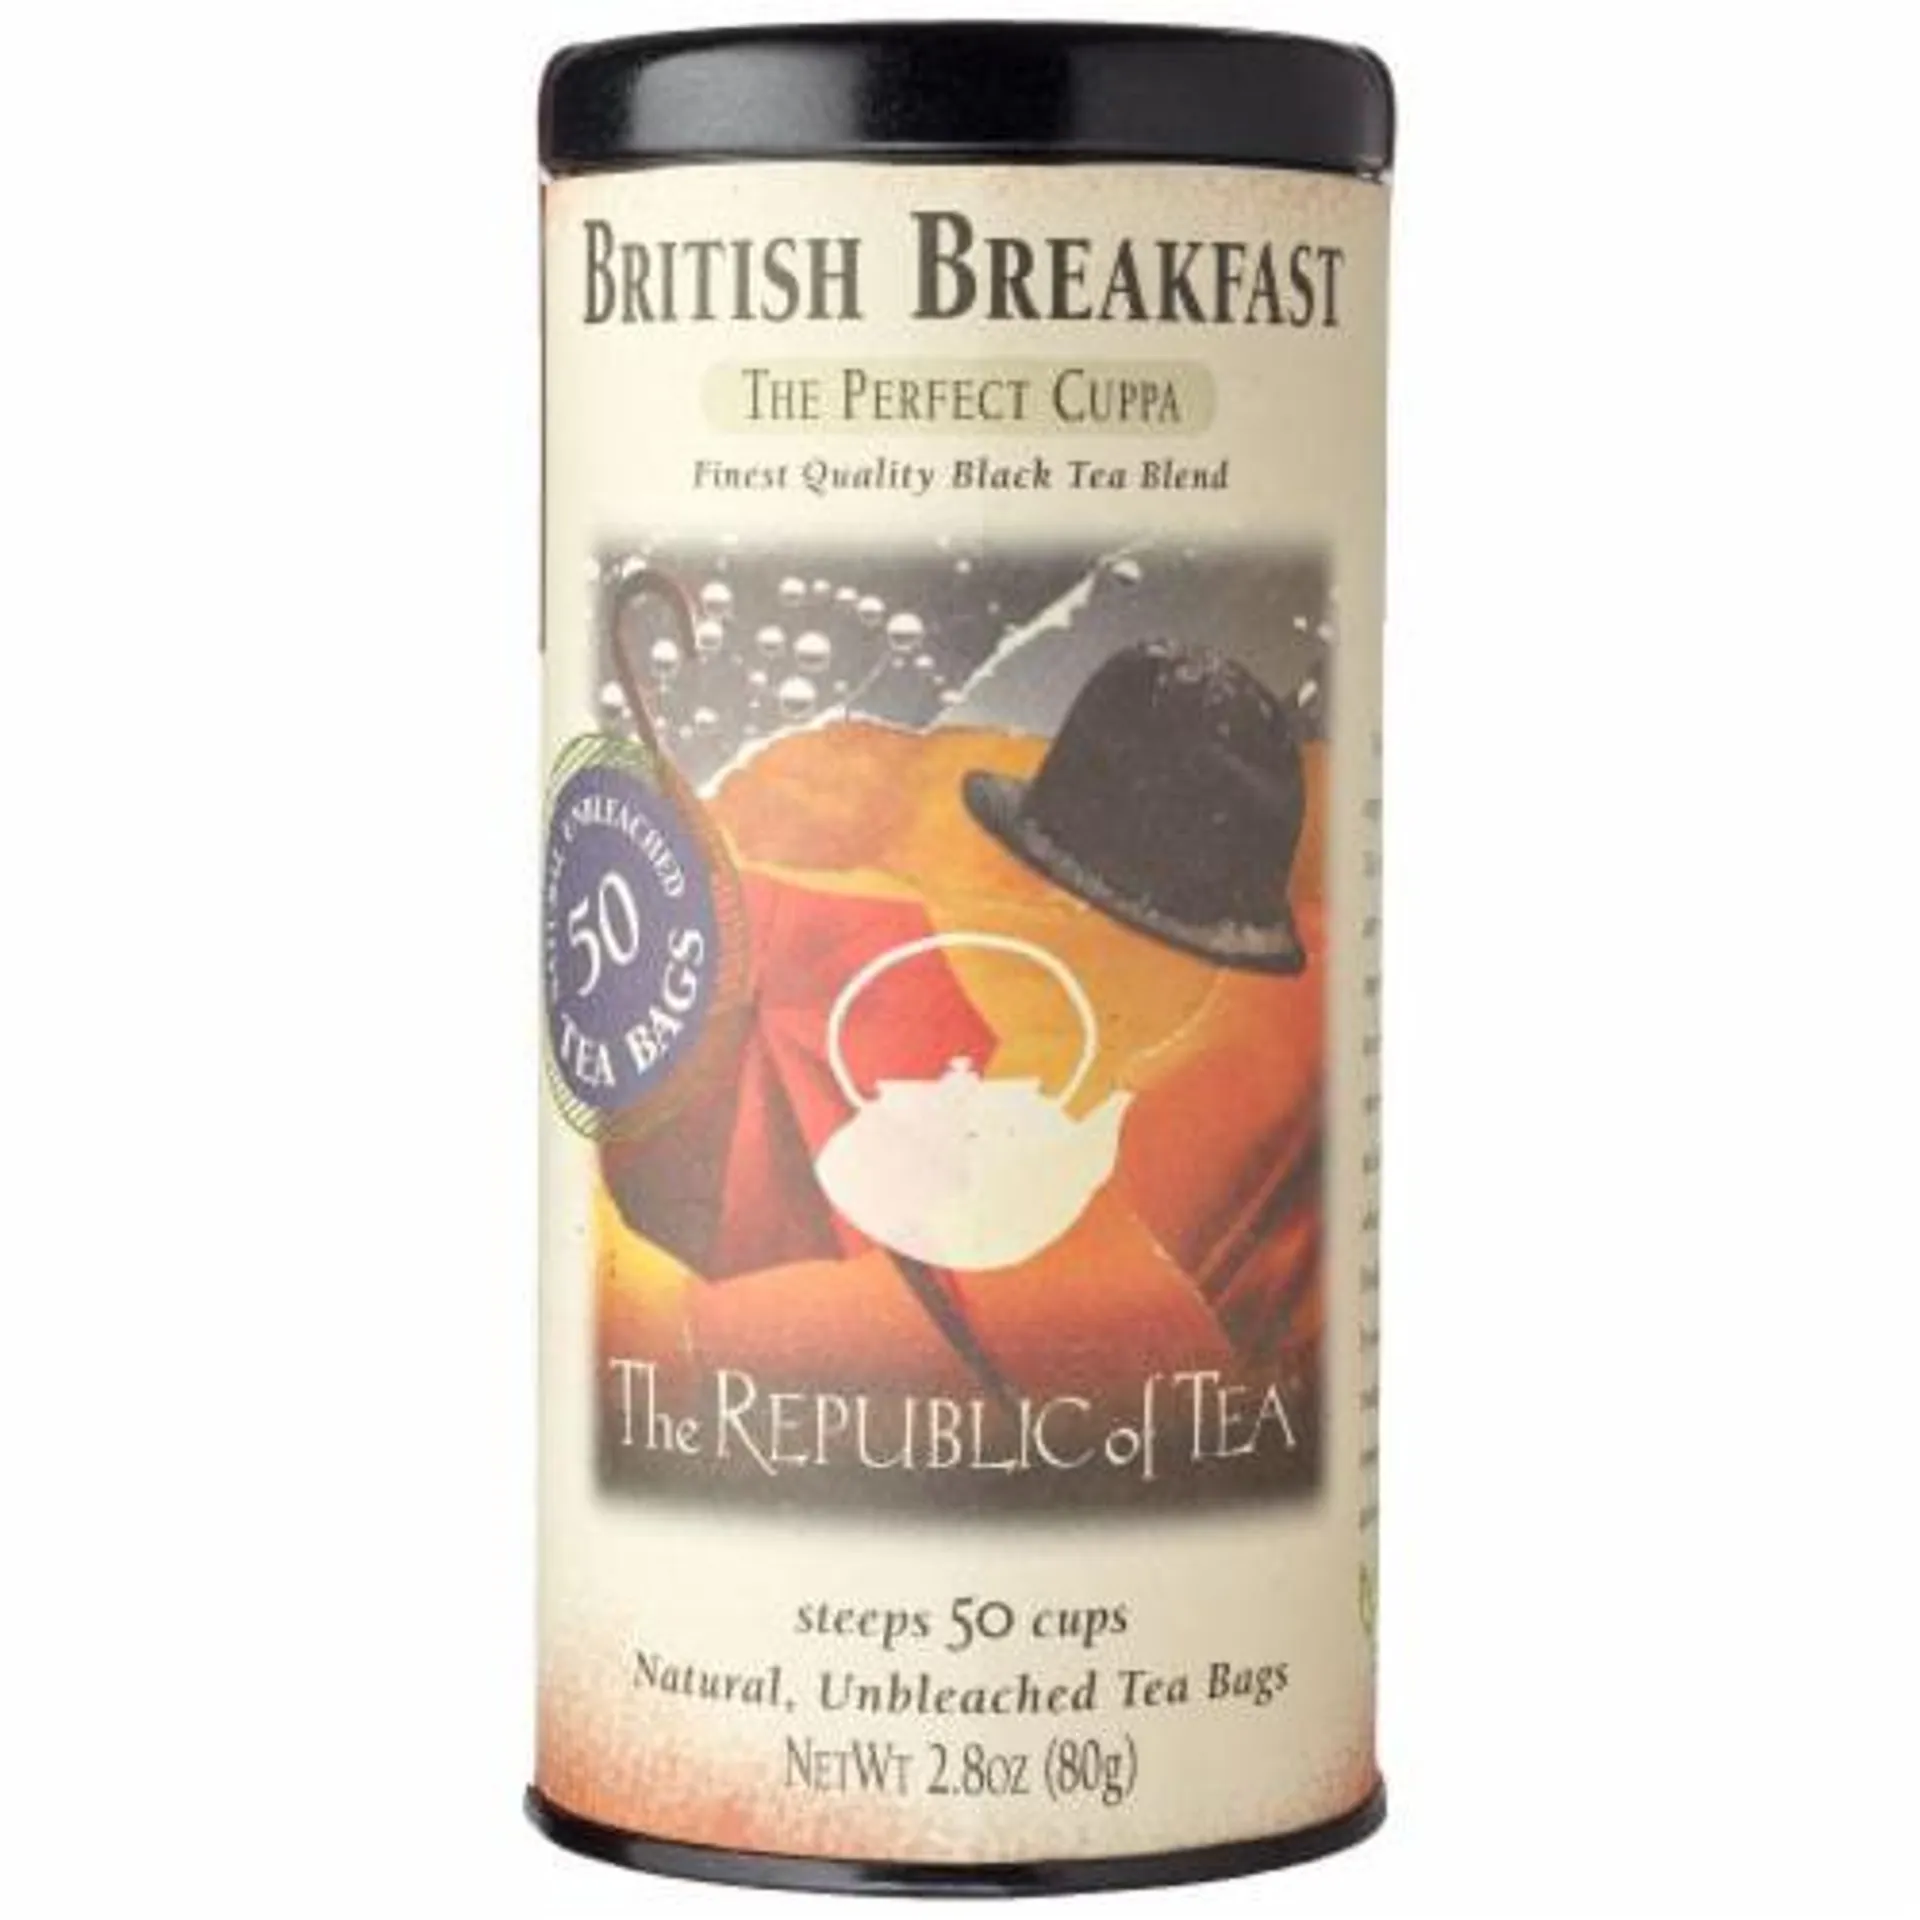 The Republic of Tea® British Breakfast Tea Bags